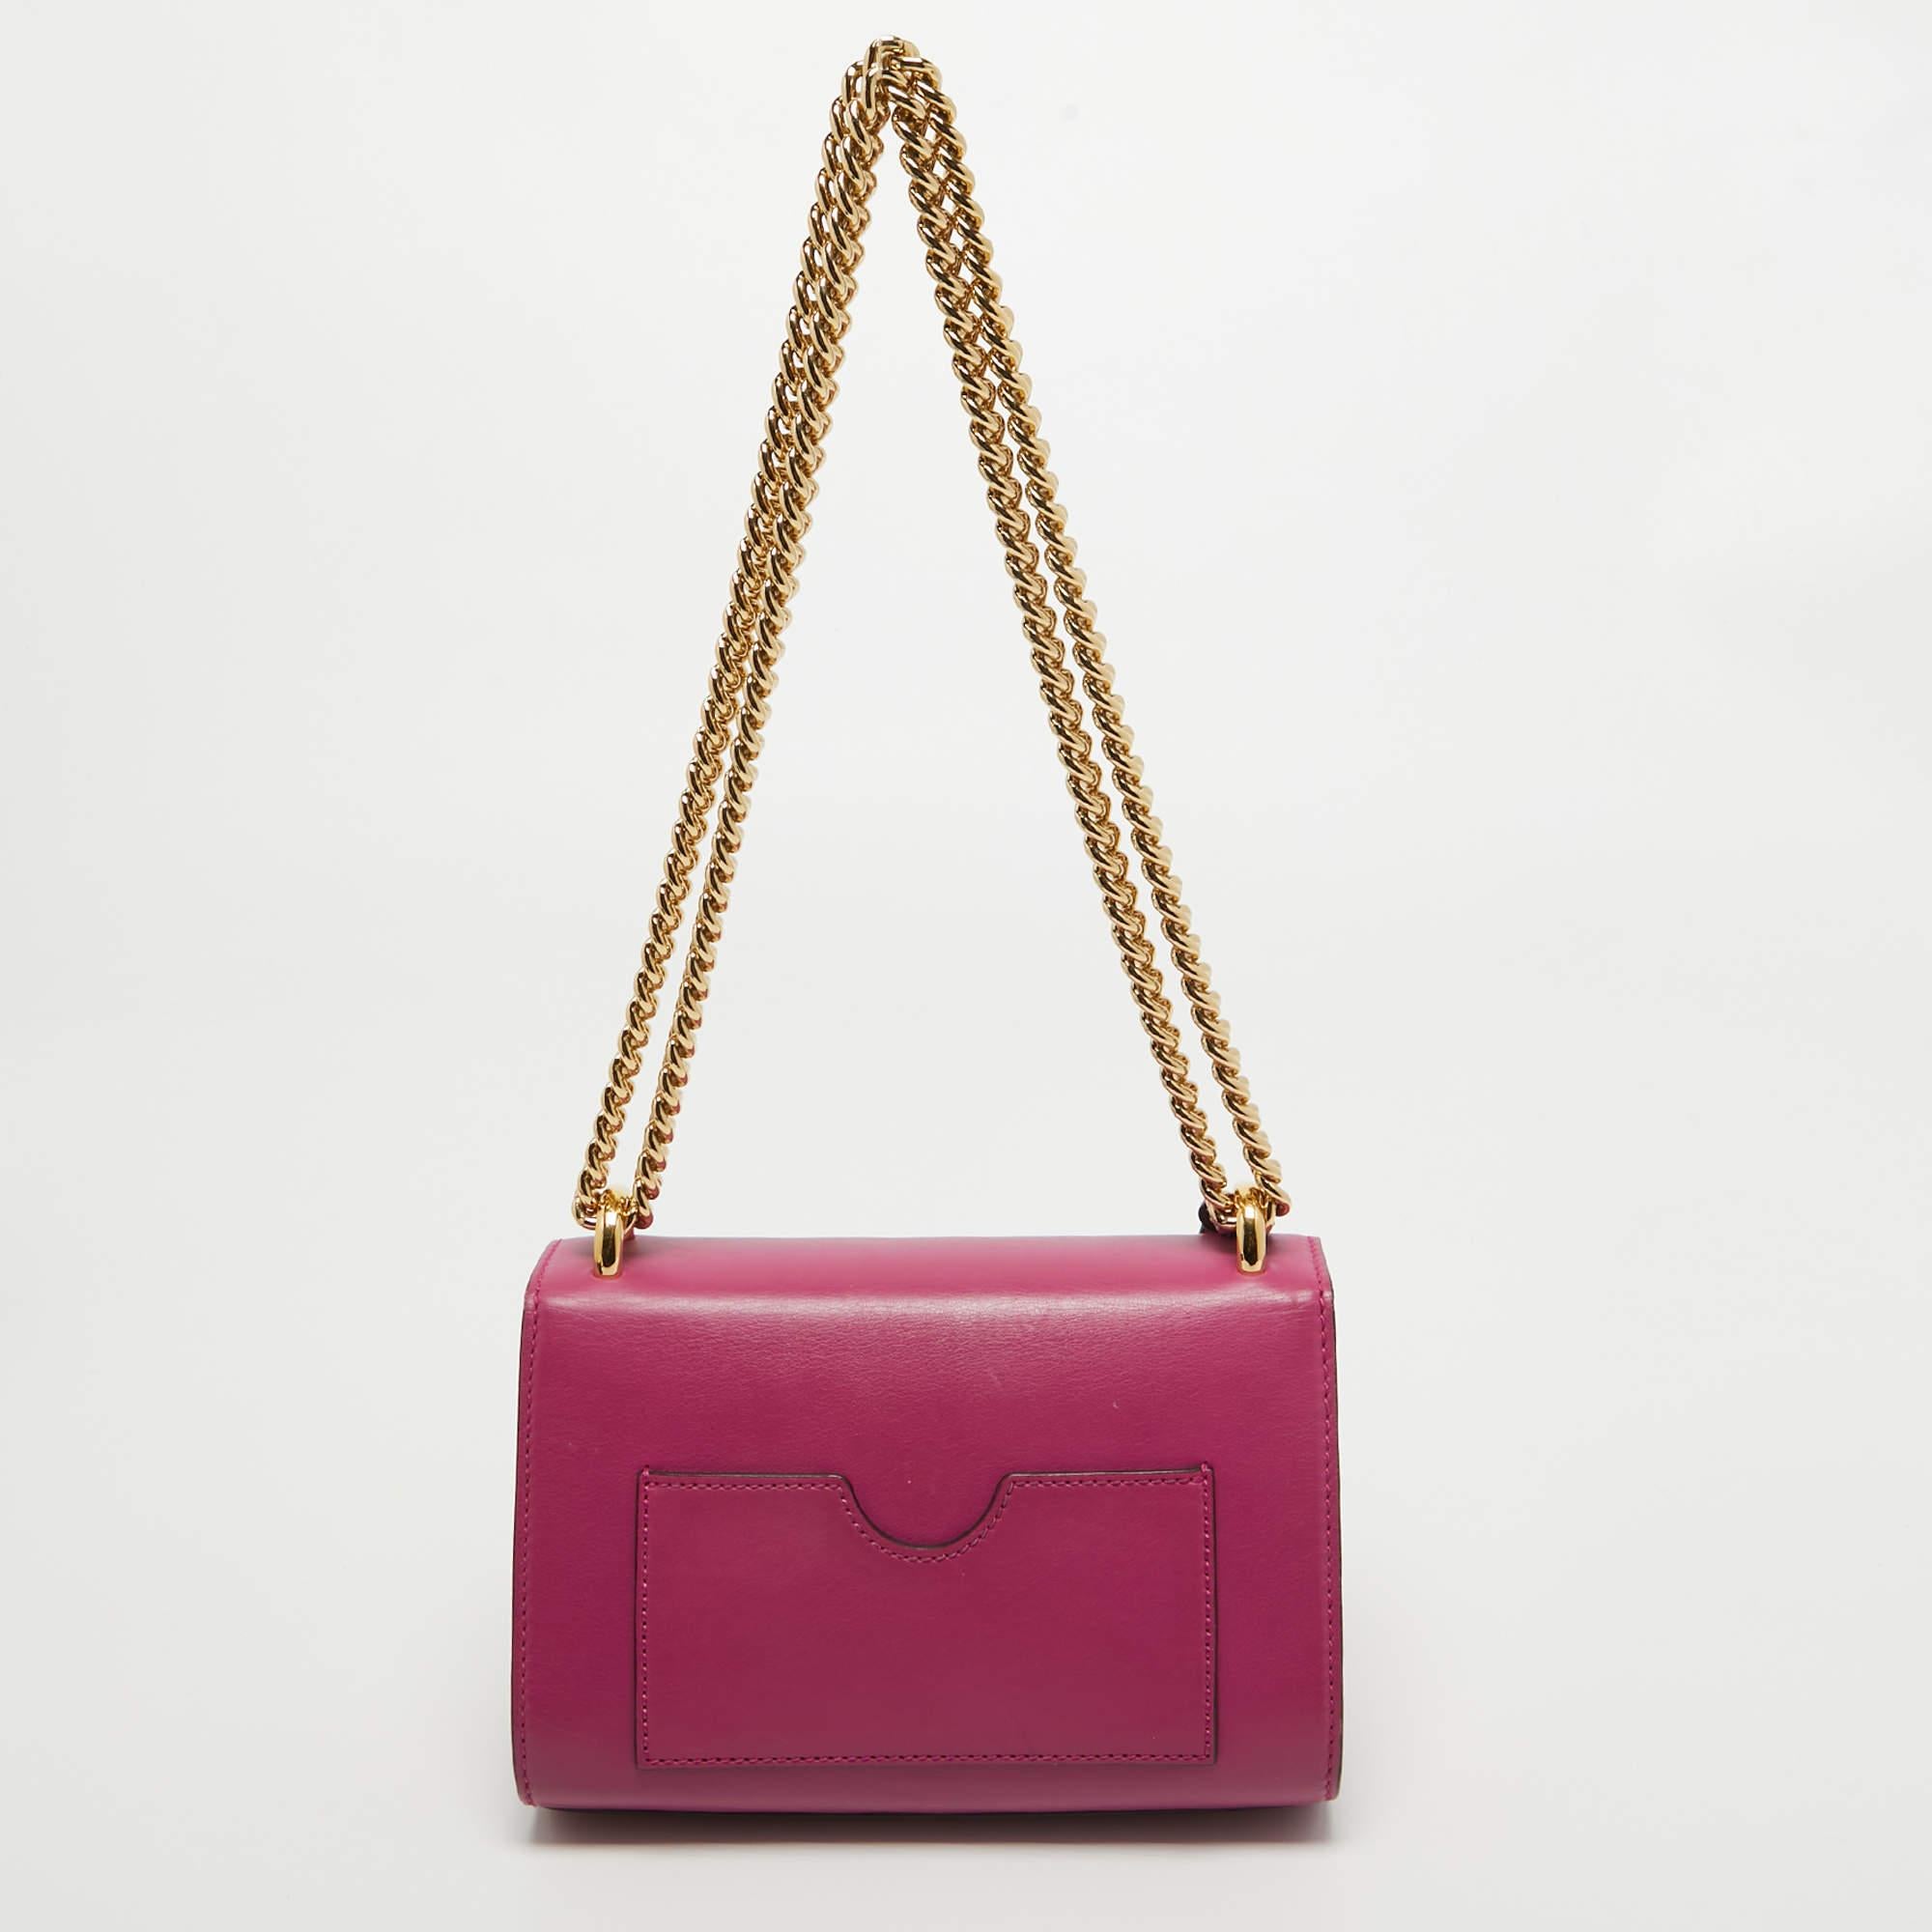 Gucci Pink Leather Small Padlock Shoulder Bag For Sale 6